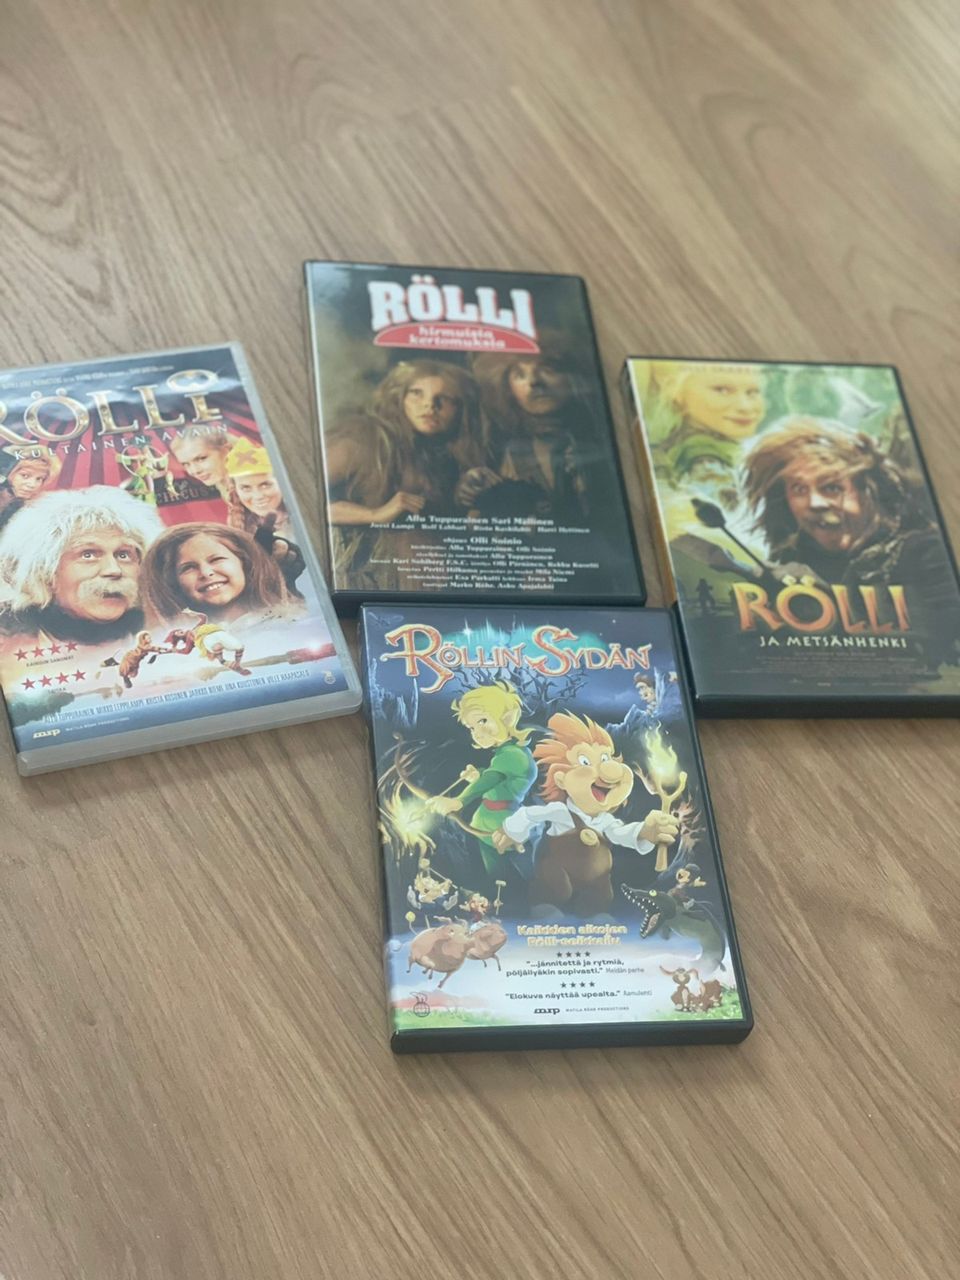 Rölli DVD:t